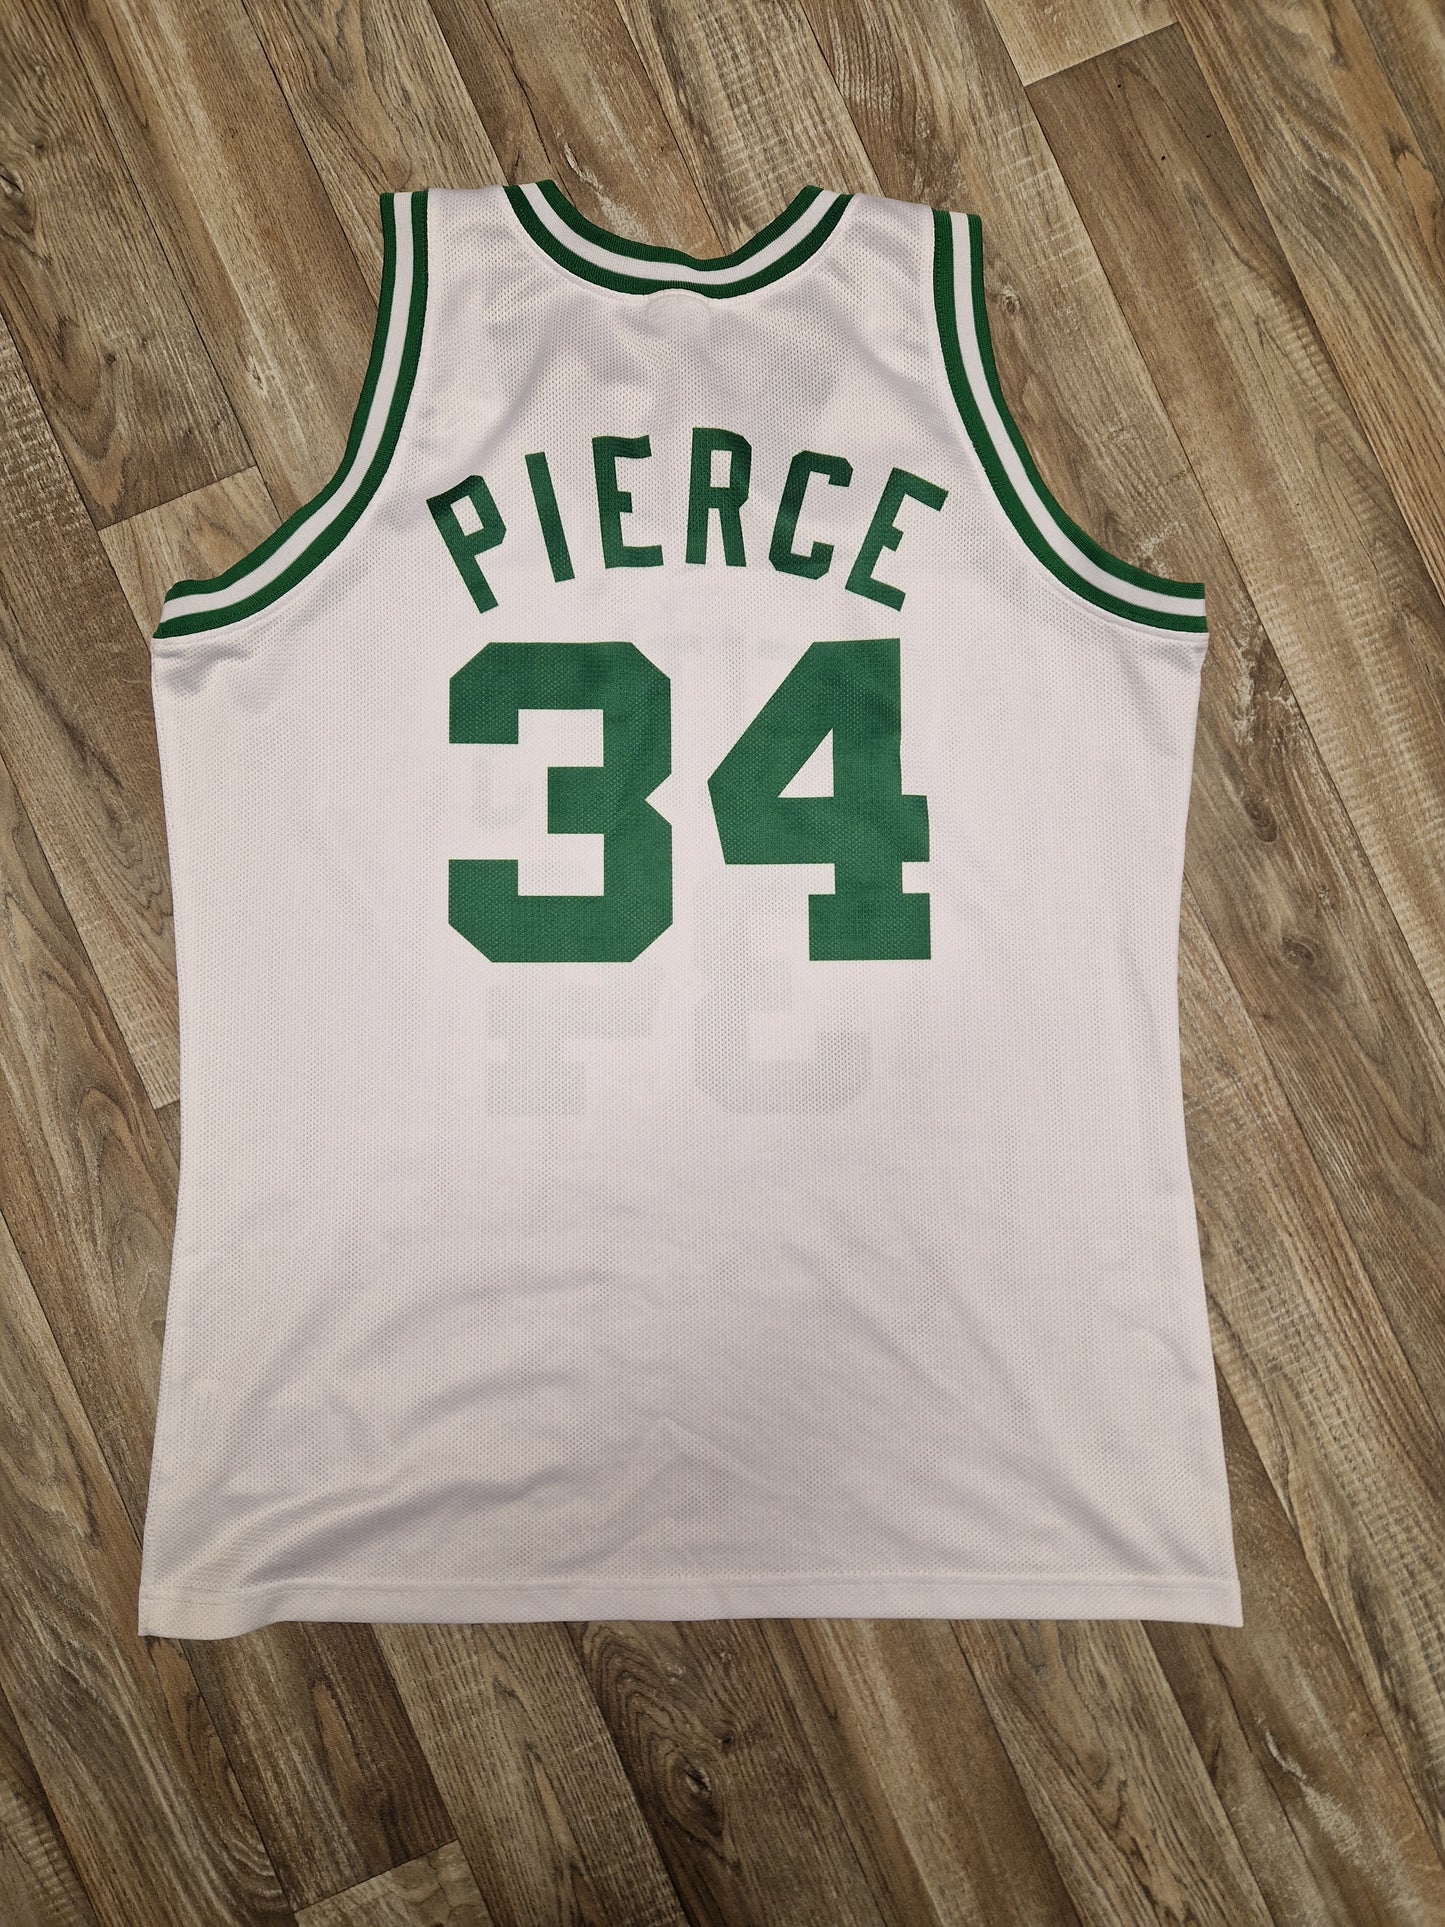 Paul Pierce Boston Celtics Jersey Size 2XL